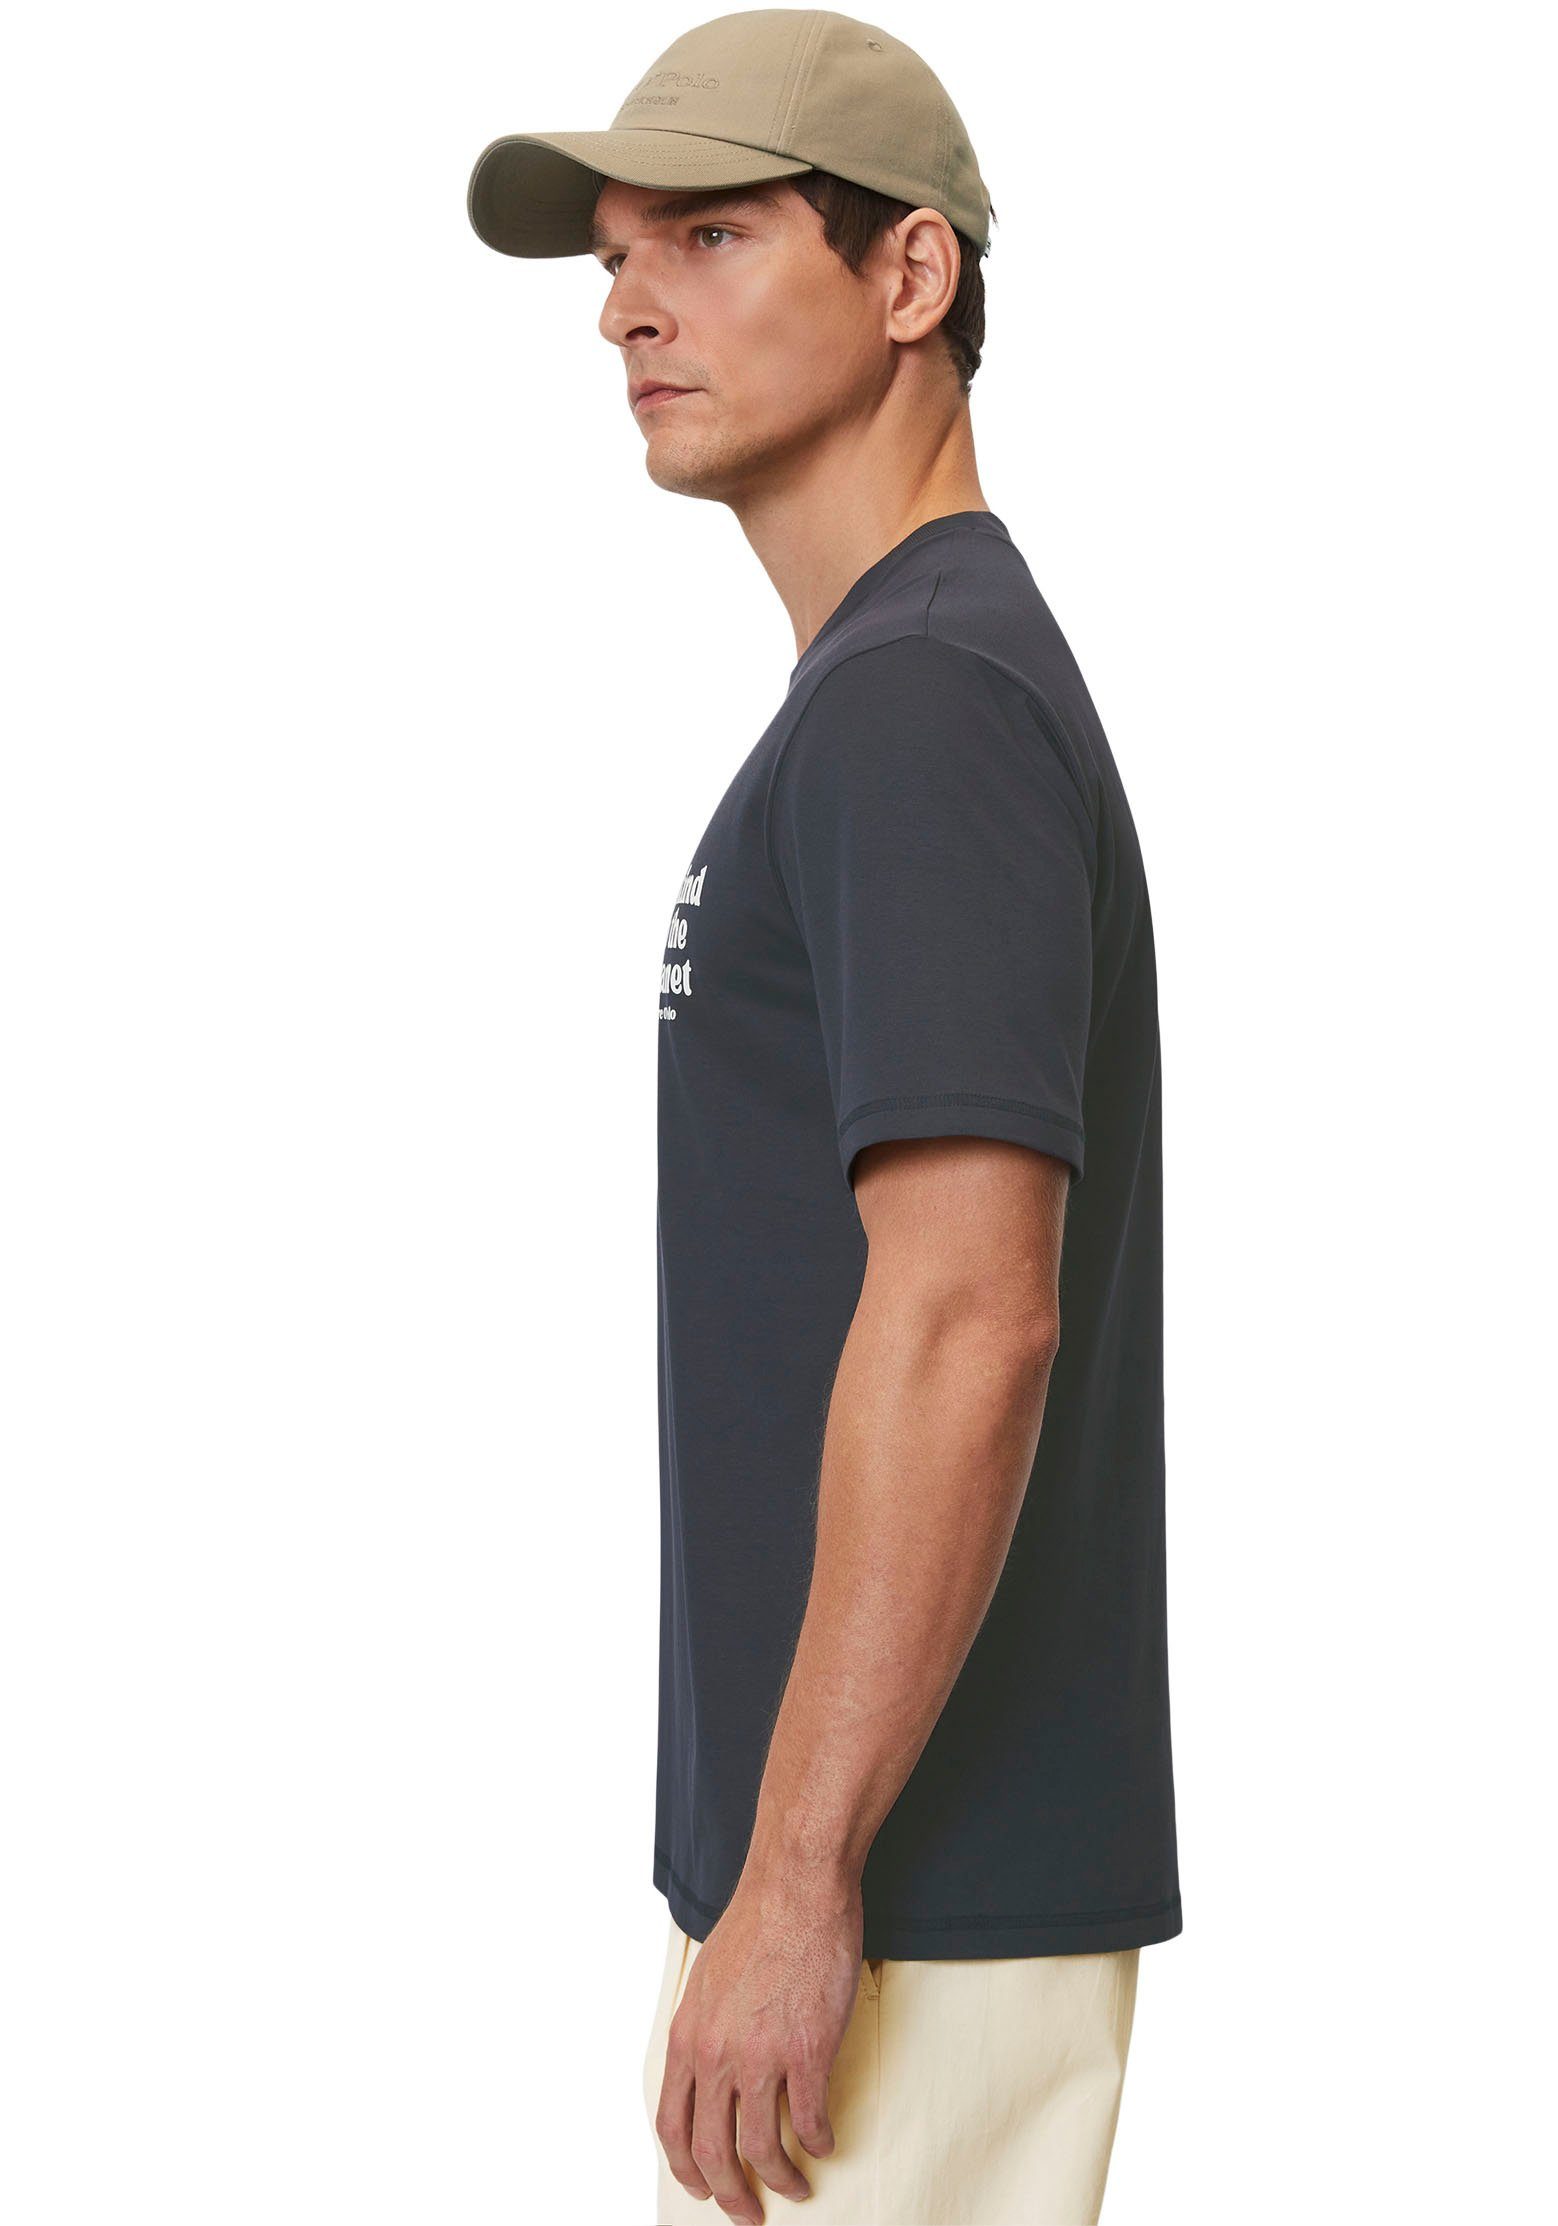 T-Shirt in Marc O'Polo Statement-Print mit Brusthöhe dunkelblau